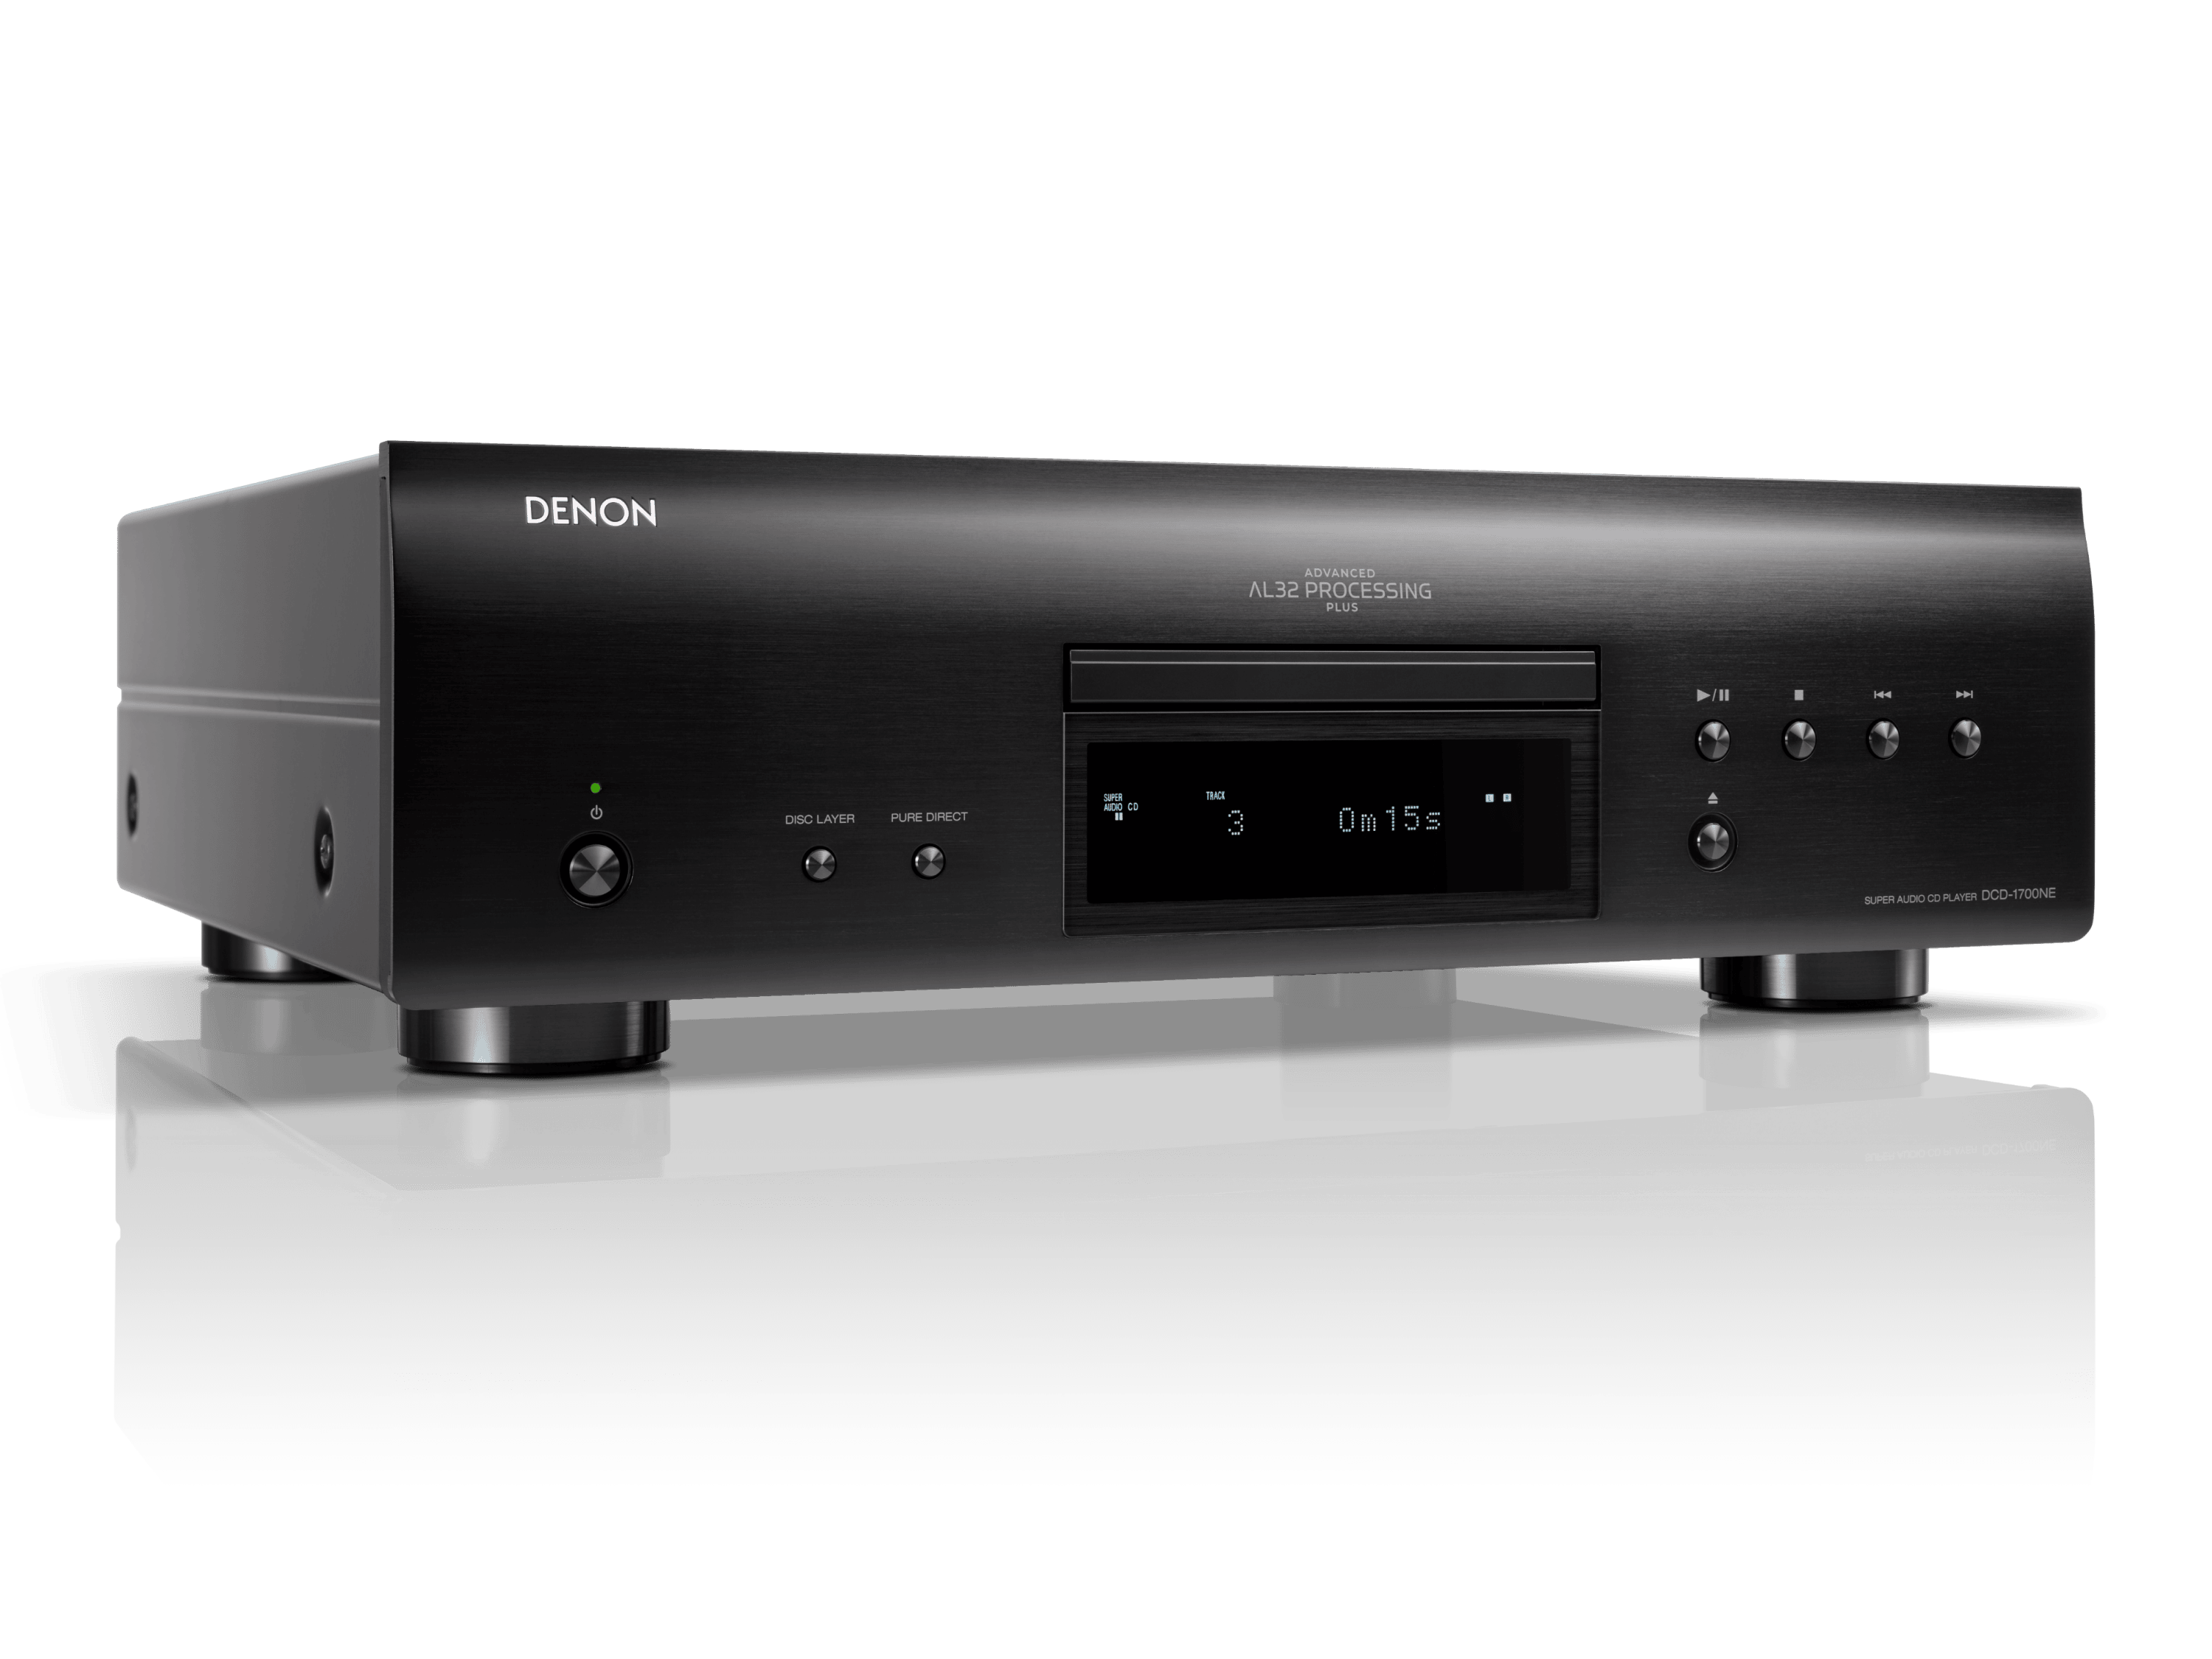 DCD-1700NE - CD/SACD-Player DCD-1700NE Europe | Denon AL32 Plus Processing - Advanced mit